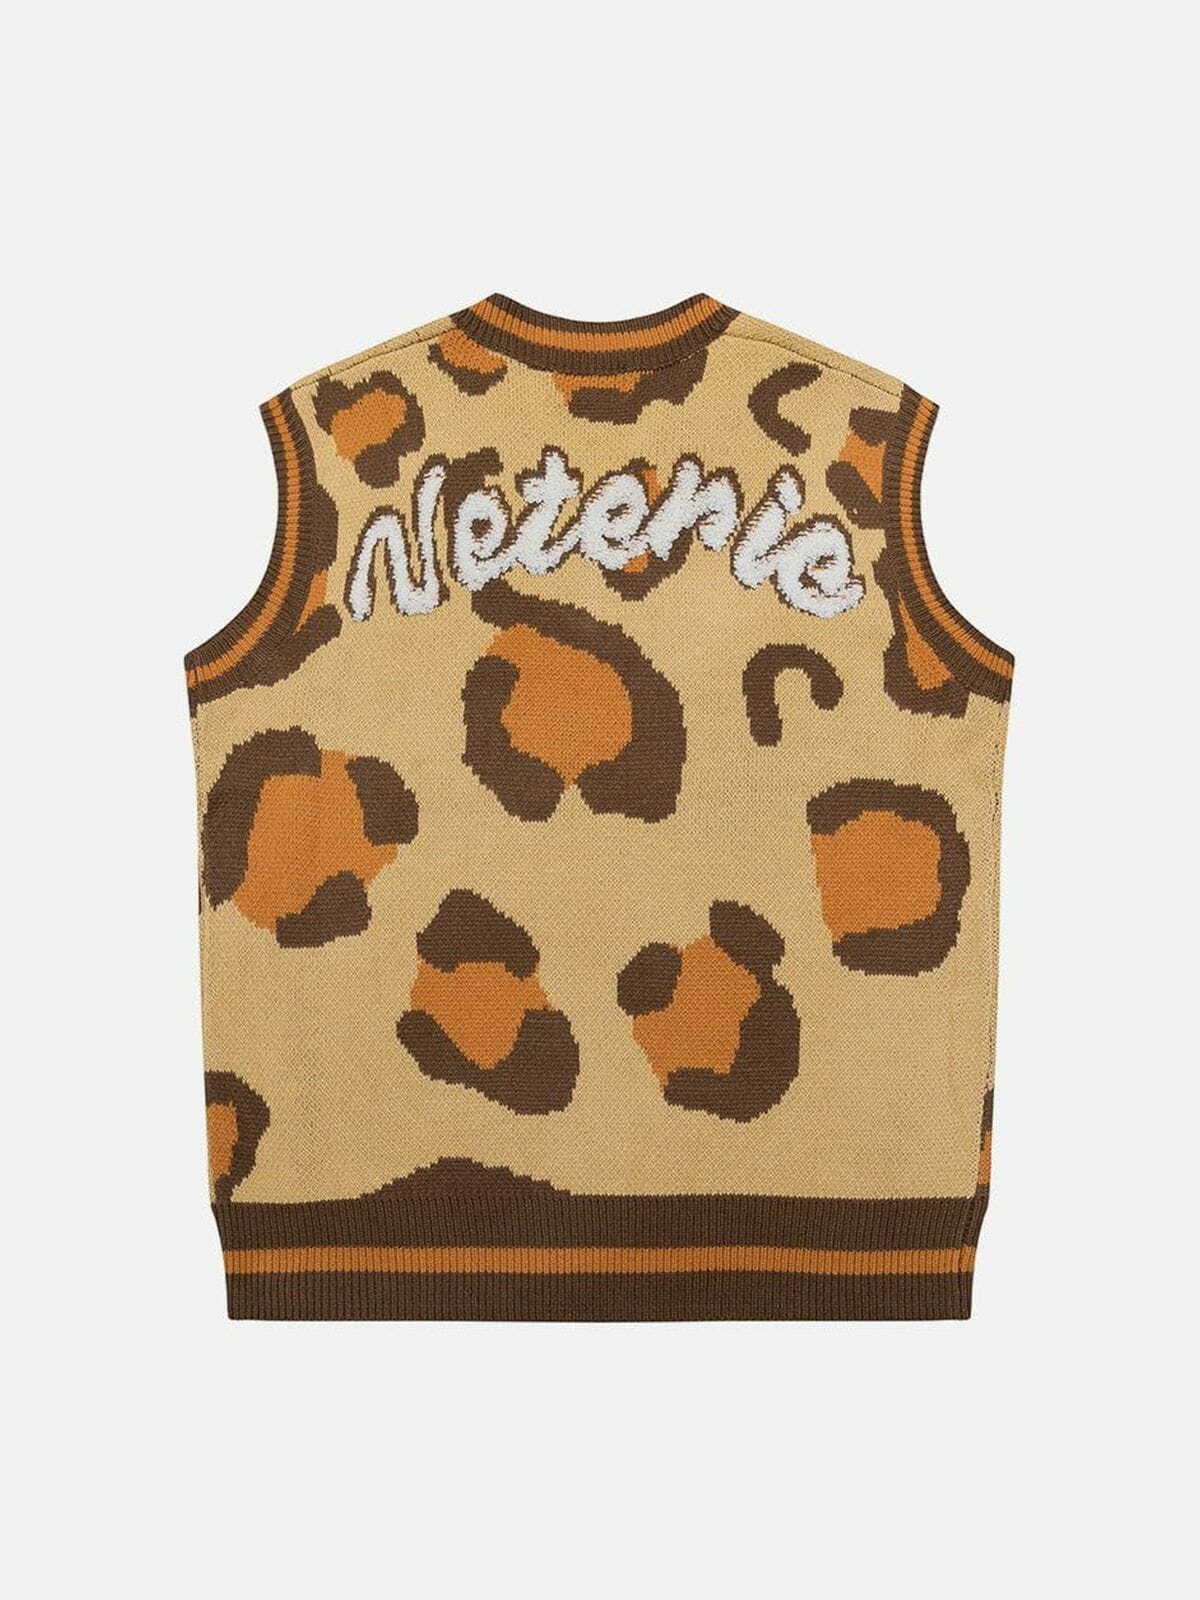 leopard print vest edgy  retro animal patterned sleeveless top 2060